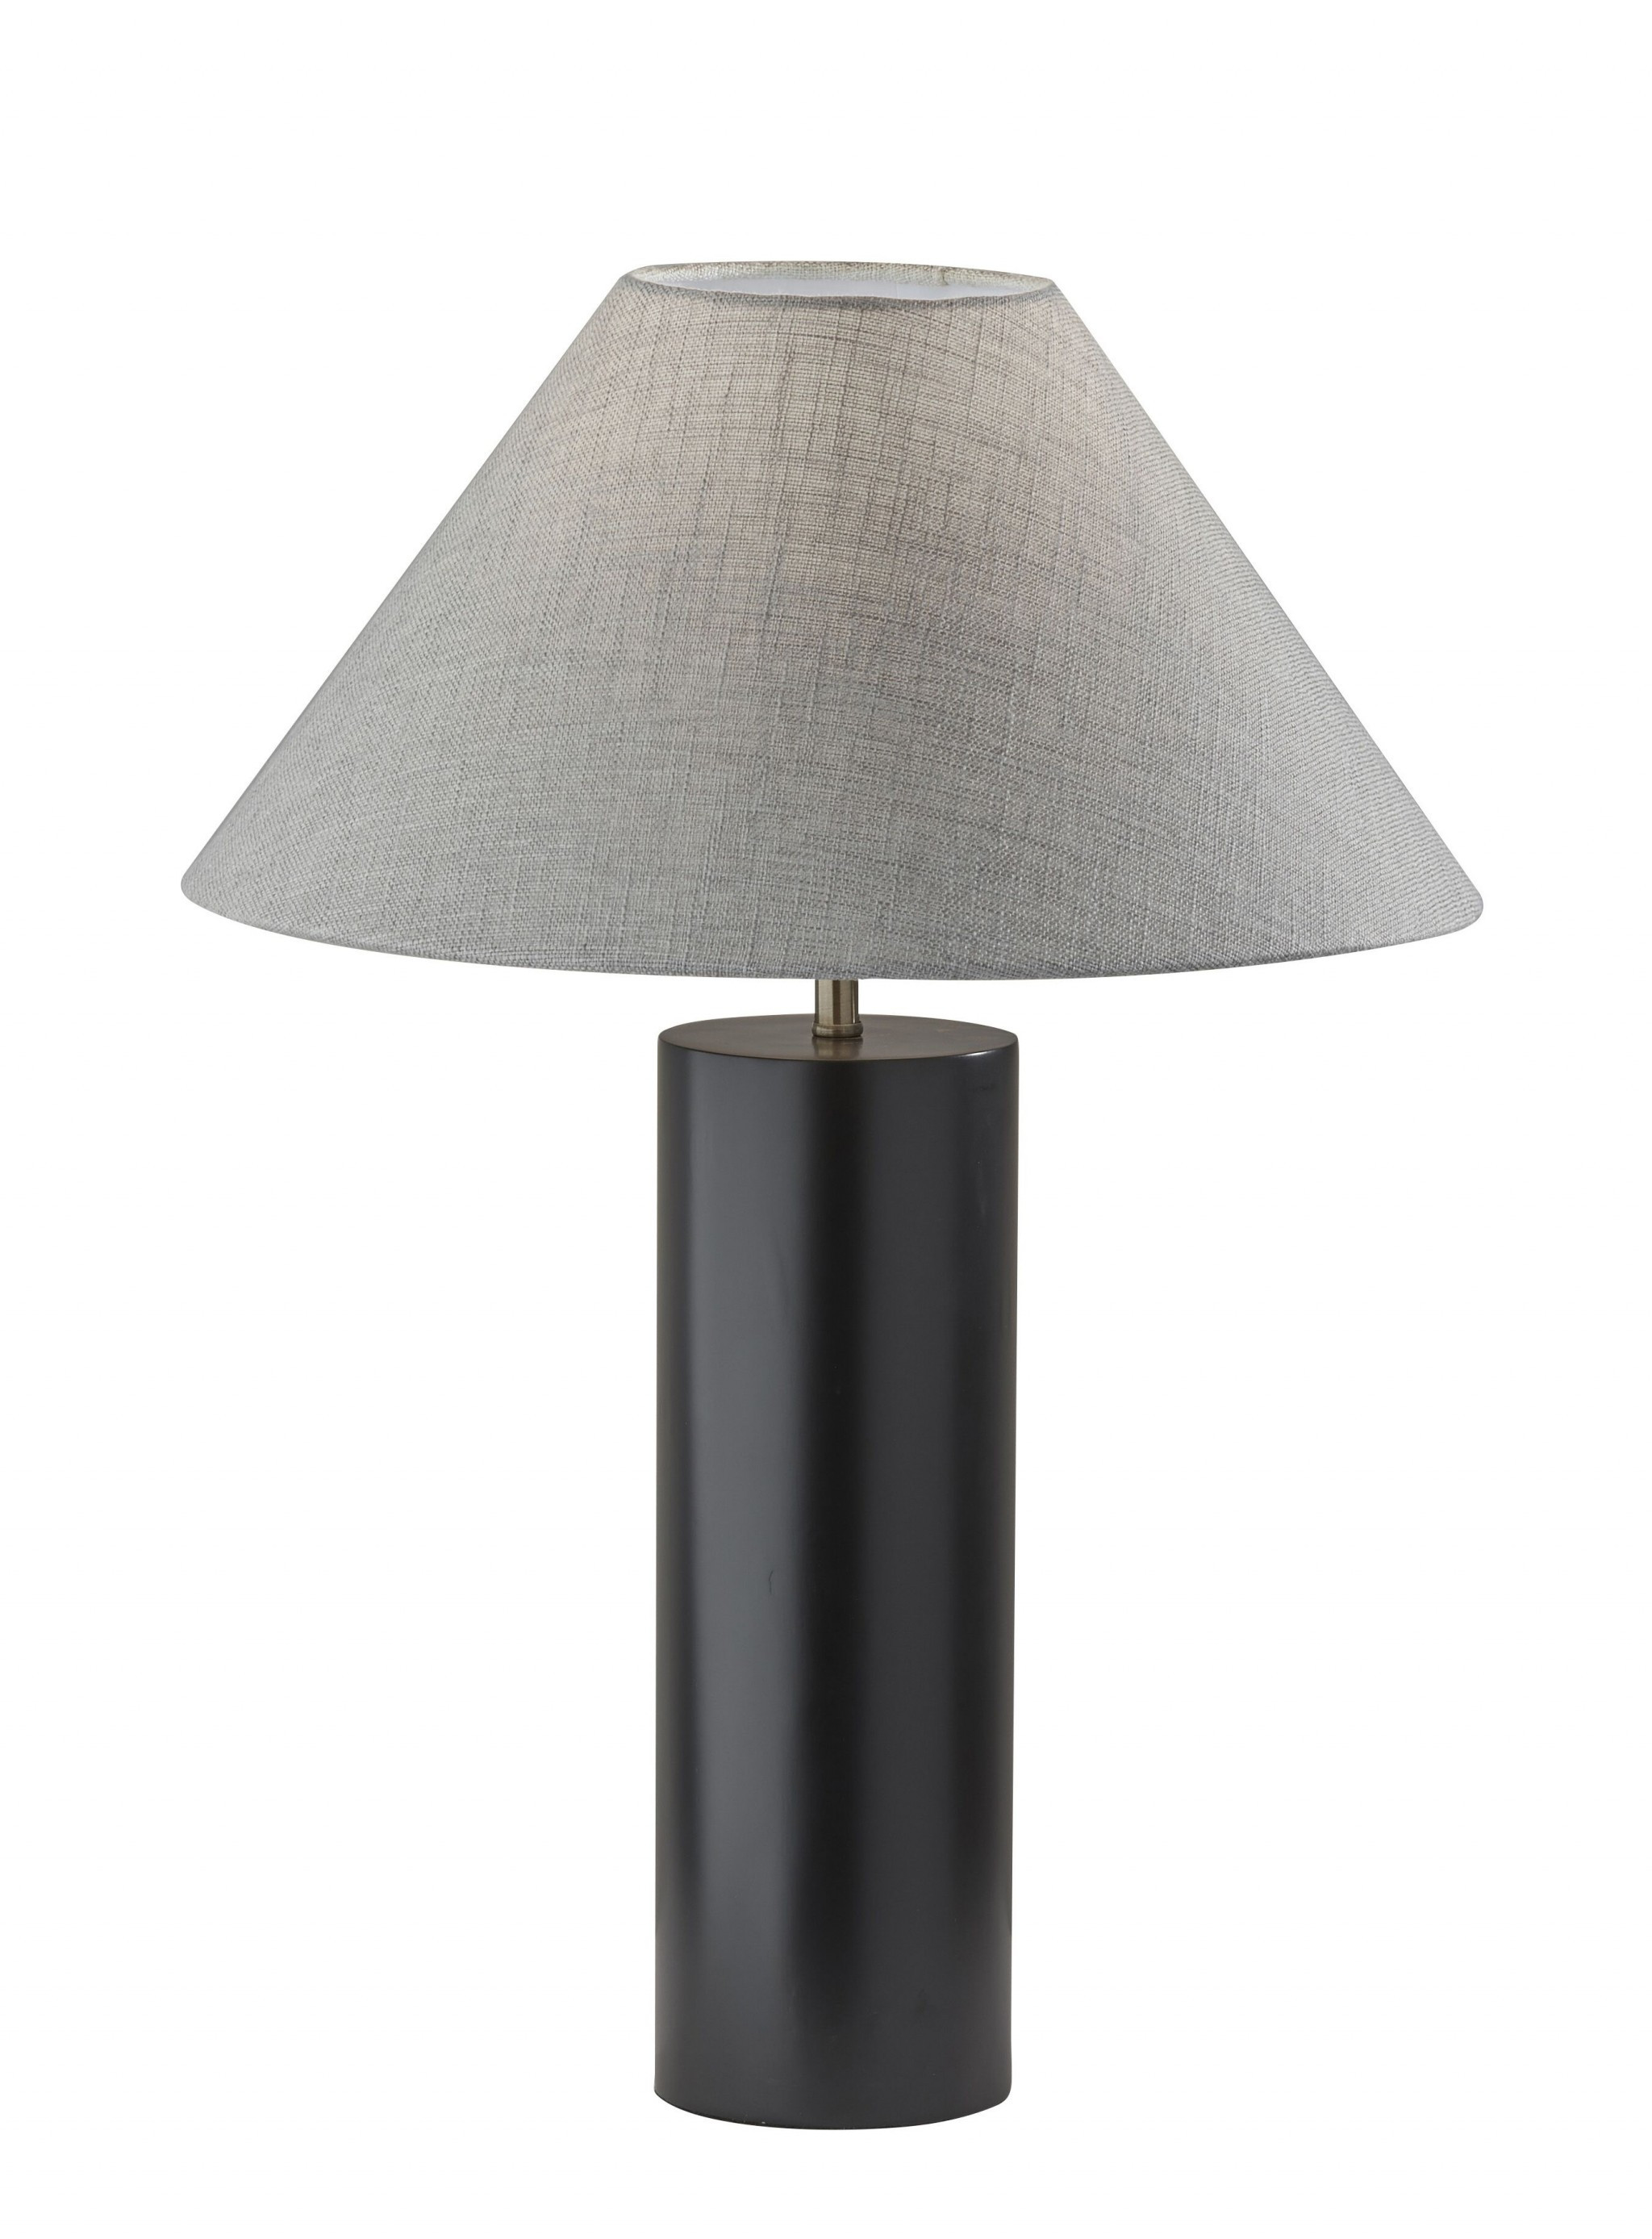 18" X 18" X 25.5" Black Wood Table Lamp